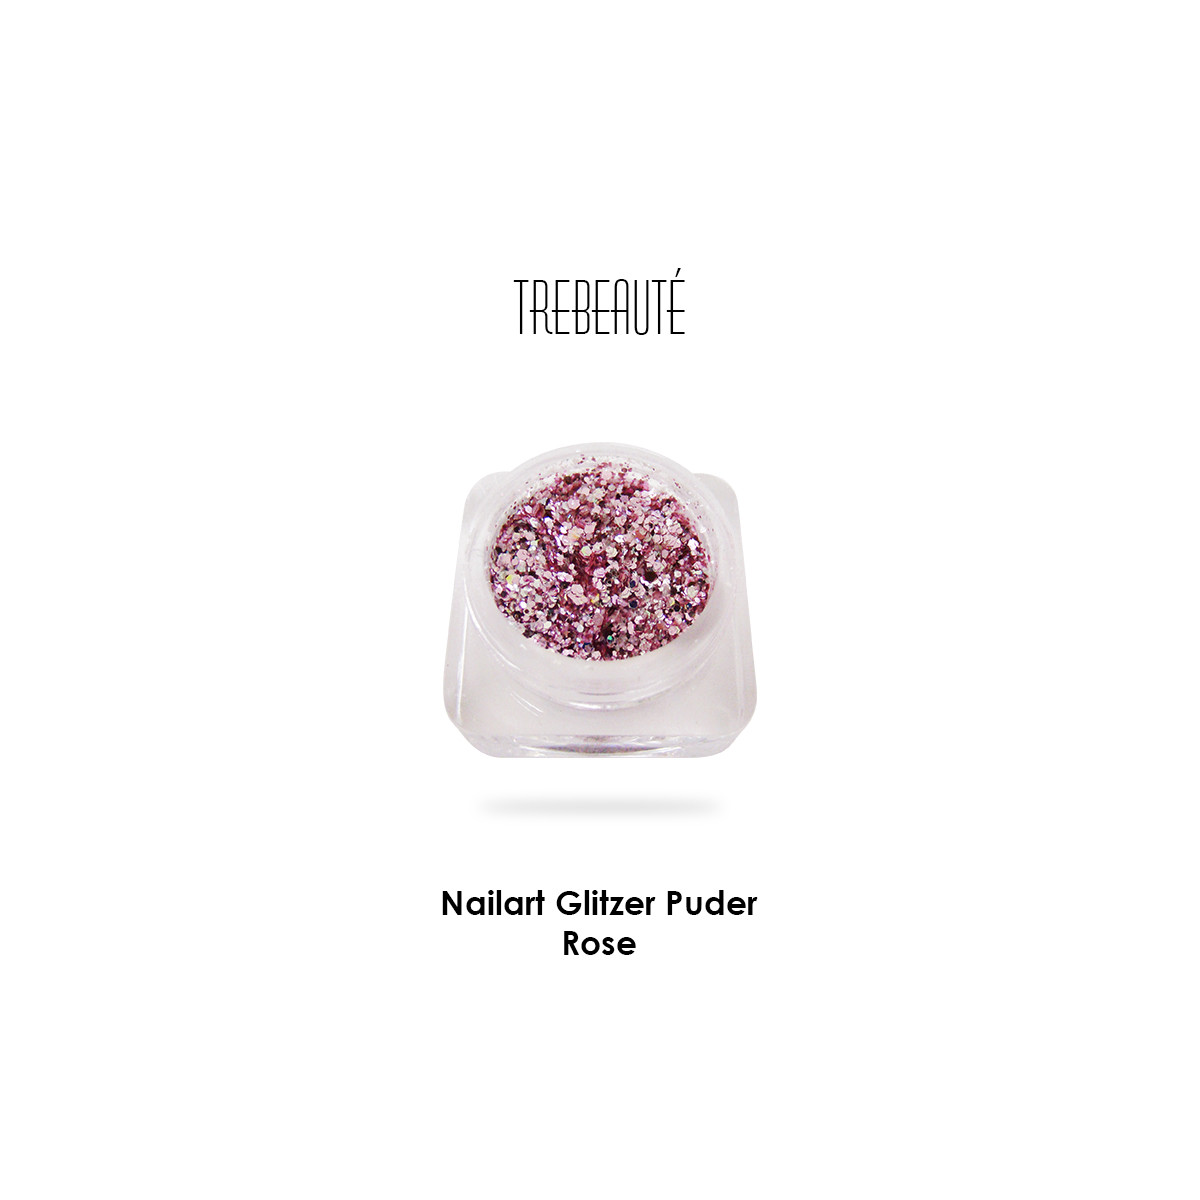 Nailart Glitzer Puder & Glitterstaub, Rose